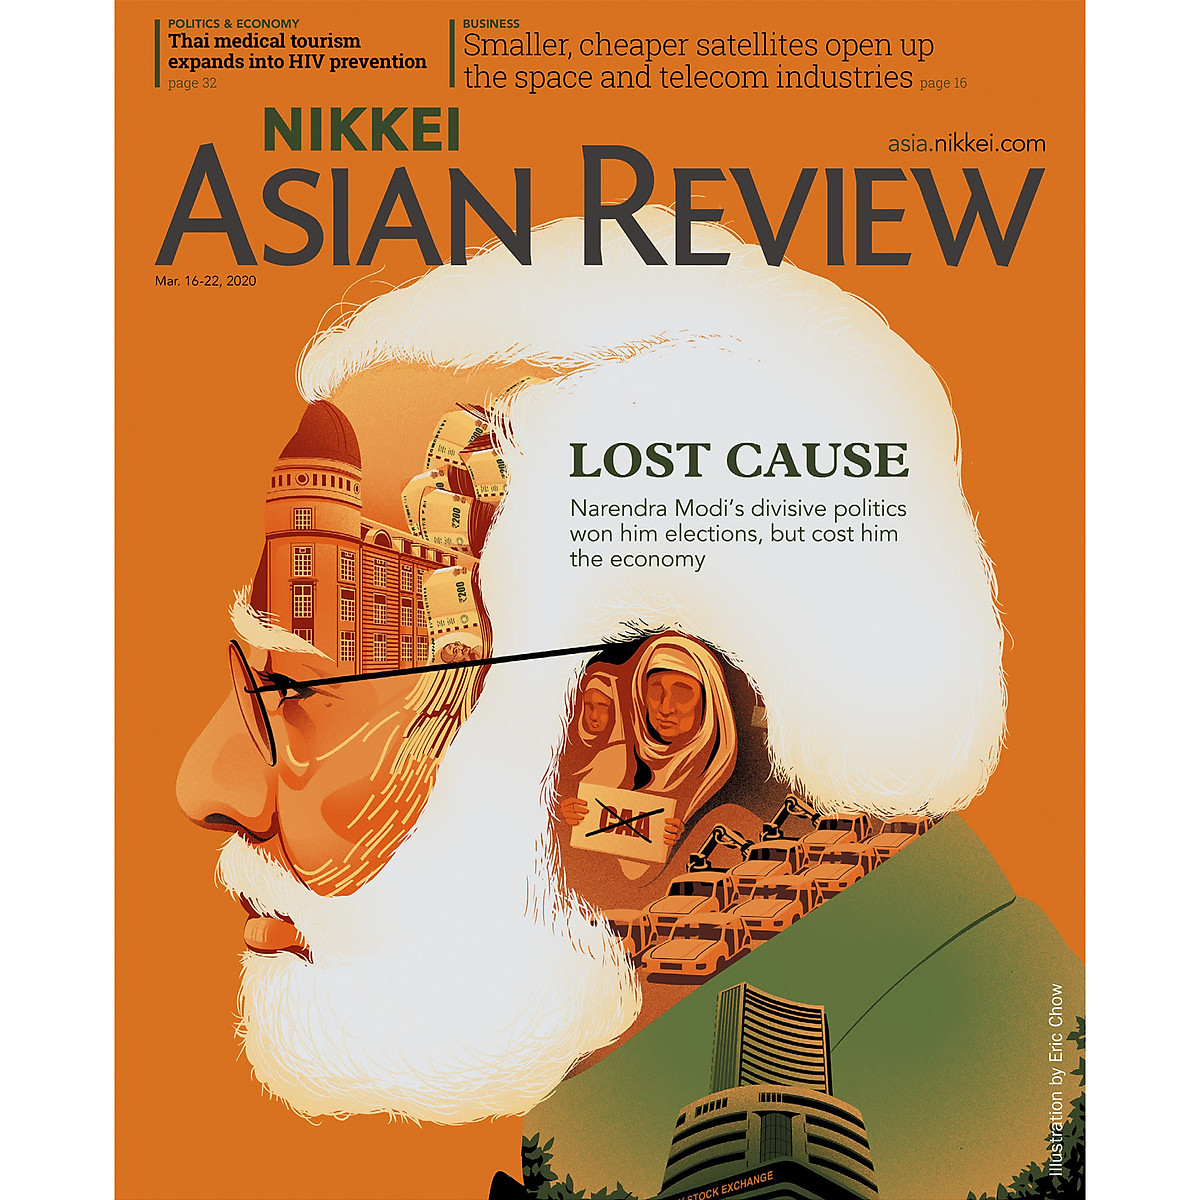 Nikkei Asian Review: Lost Cause - 11.20 - Tạp chí kinh tế, 16 Mar, 2020